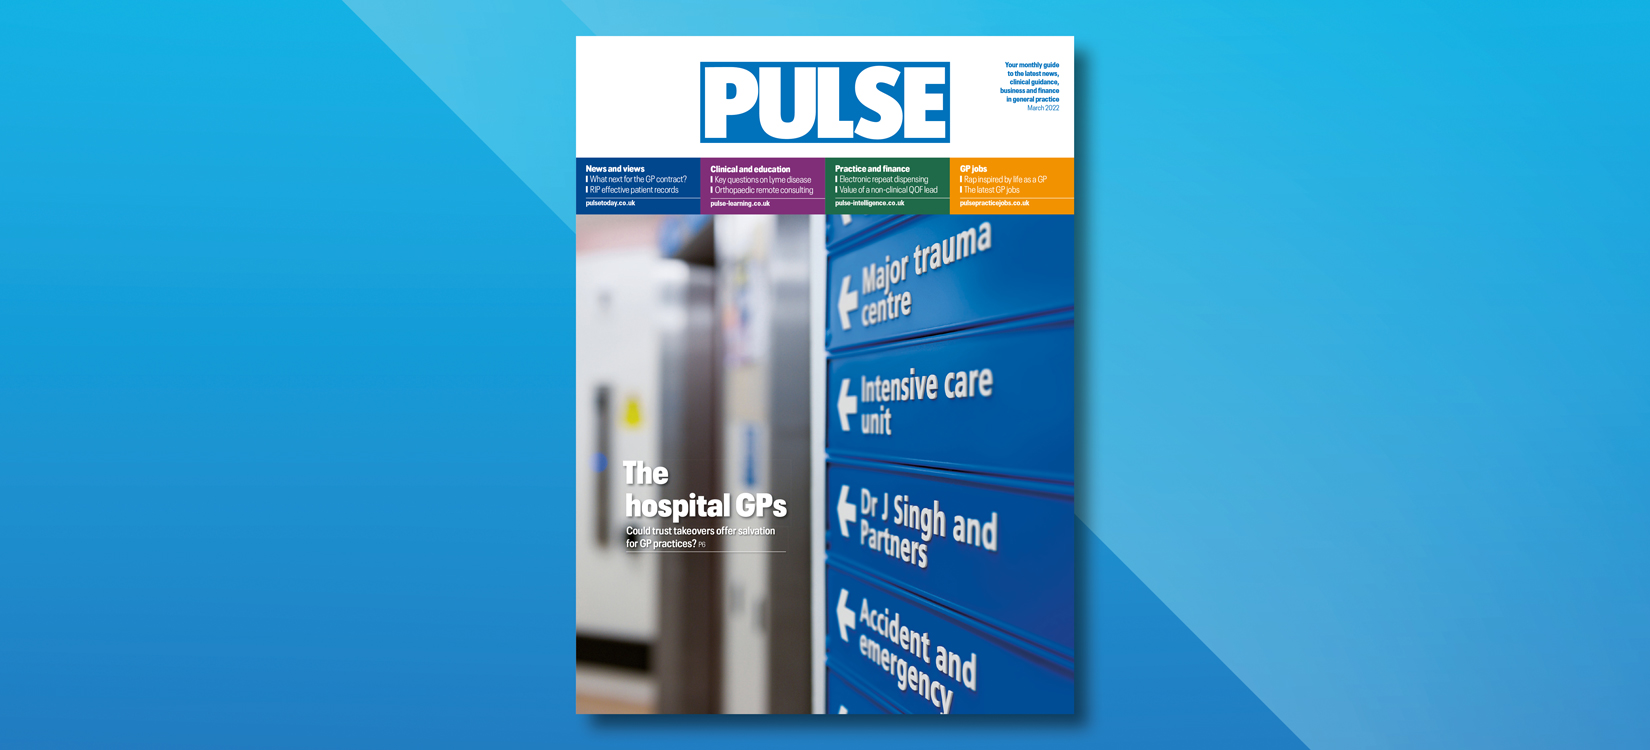 Pulse: The hospital GPs